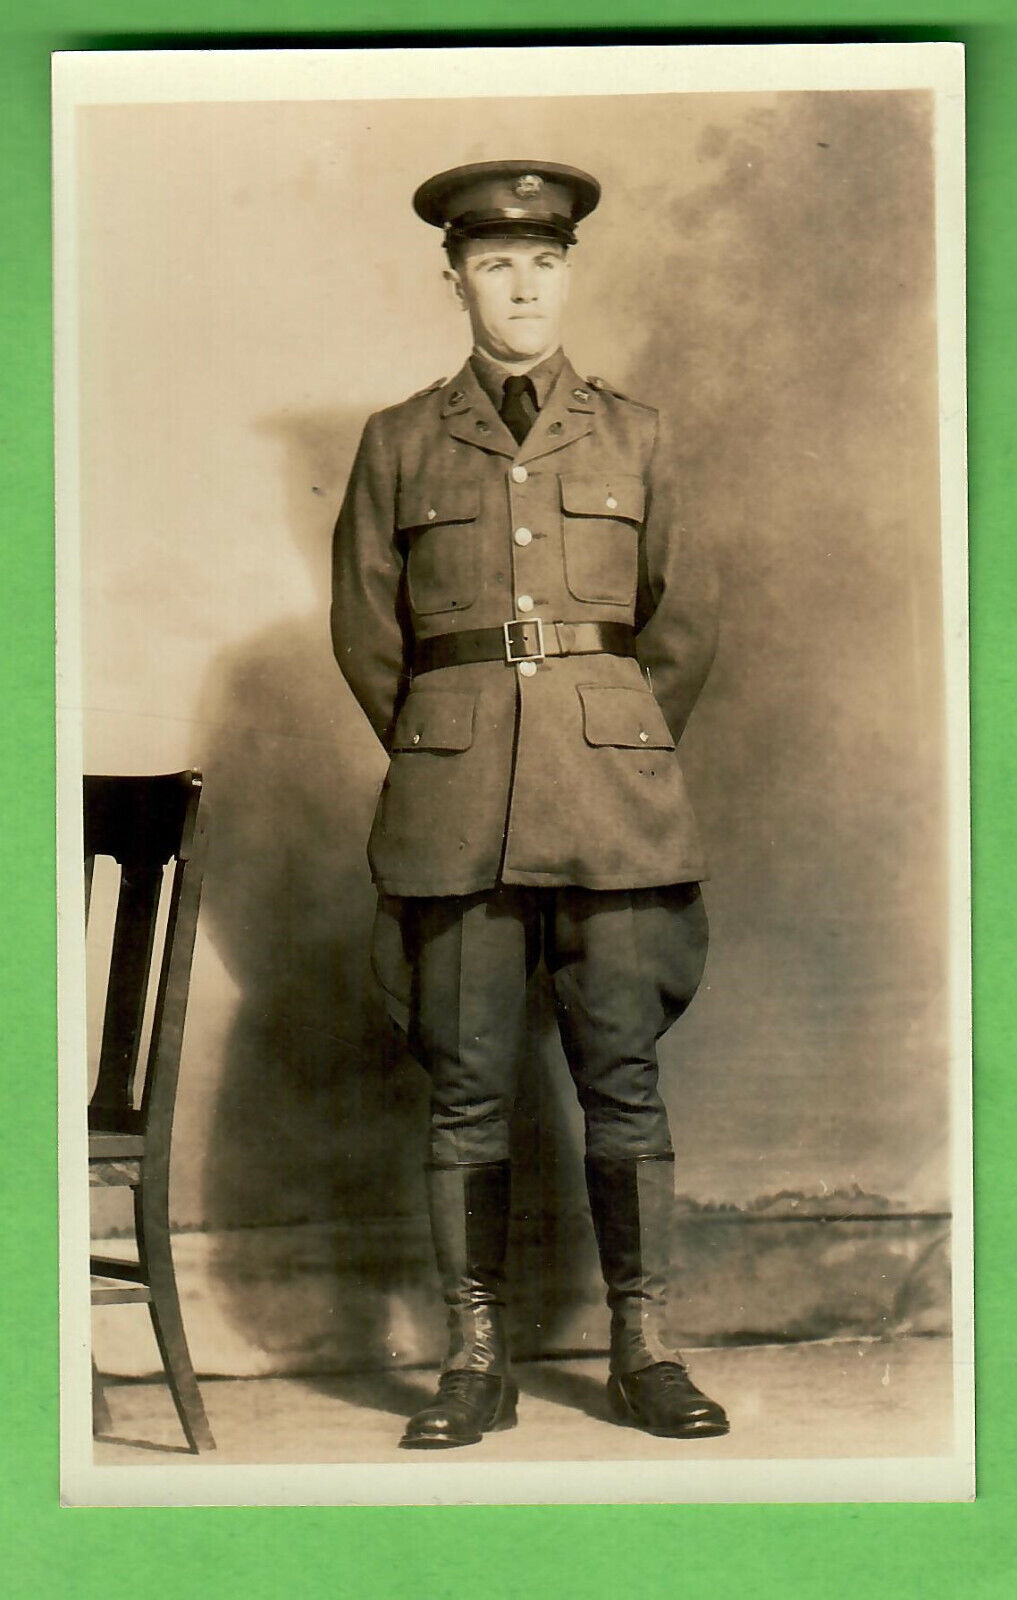 c. 1918 REAL PHOTO POSTCARD RPPC U.S. ARMY SOLDIER WORLD WAR I - UNUSED